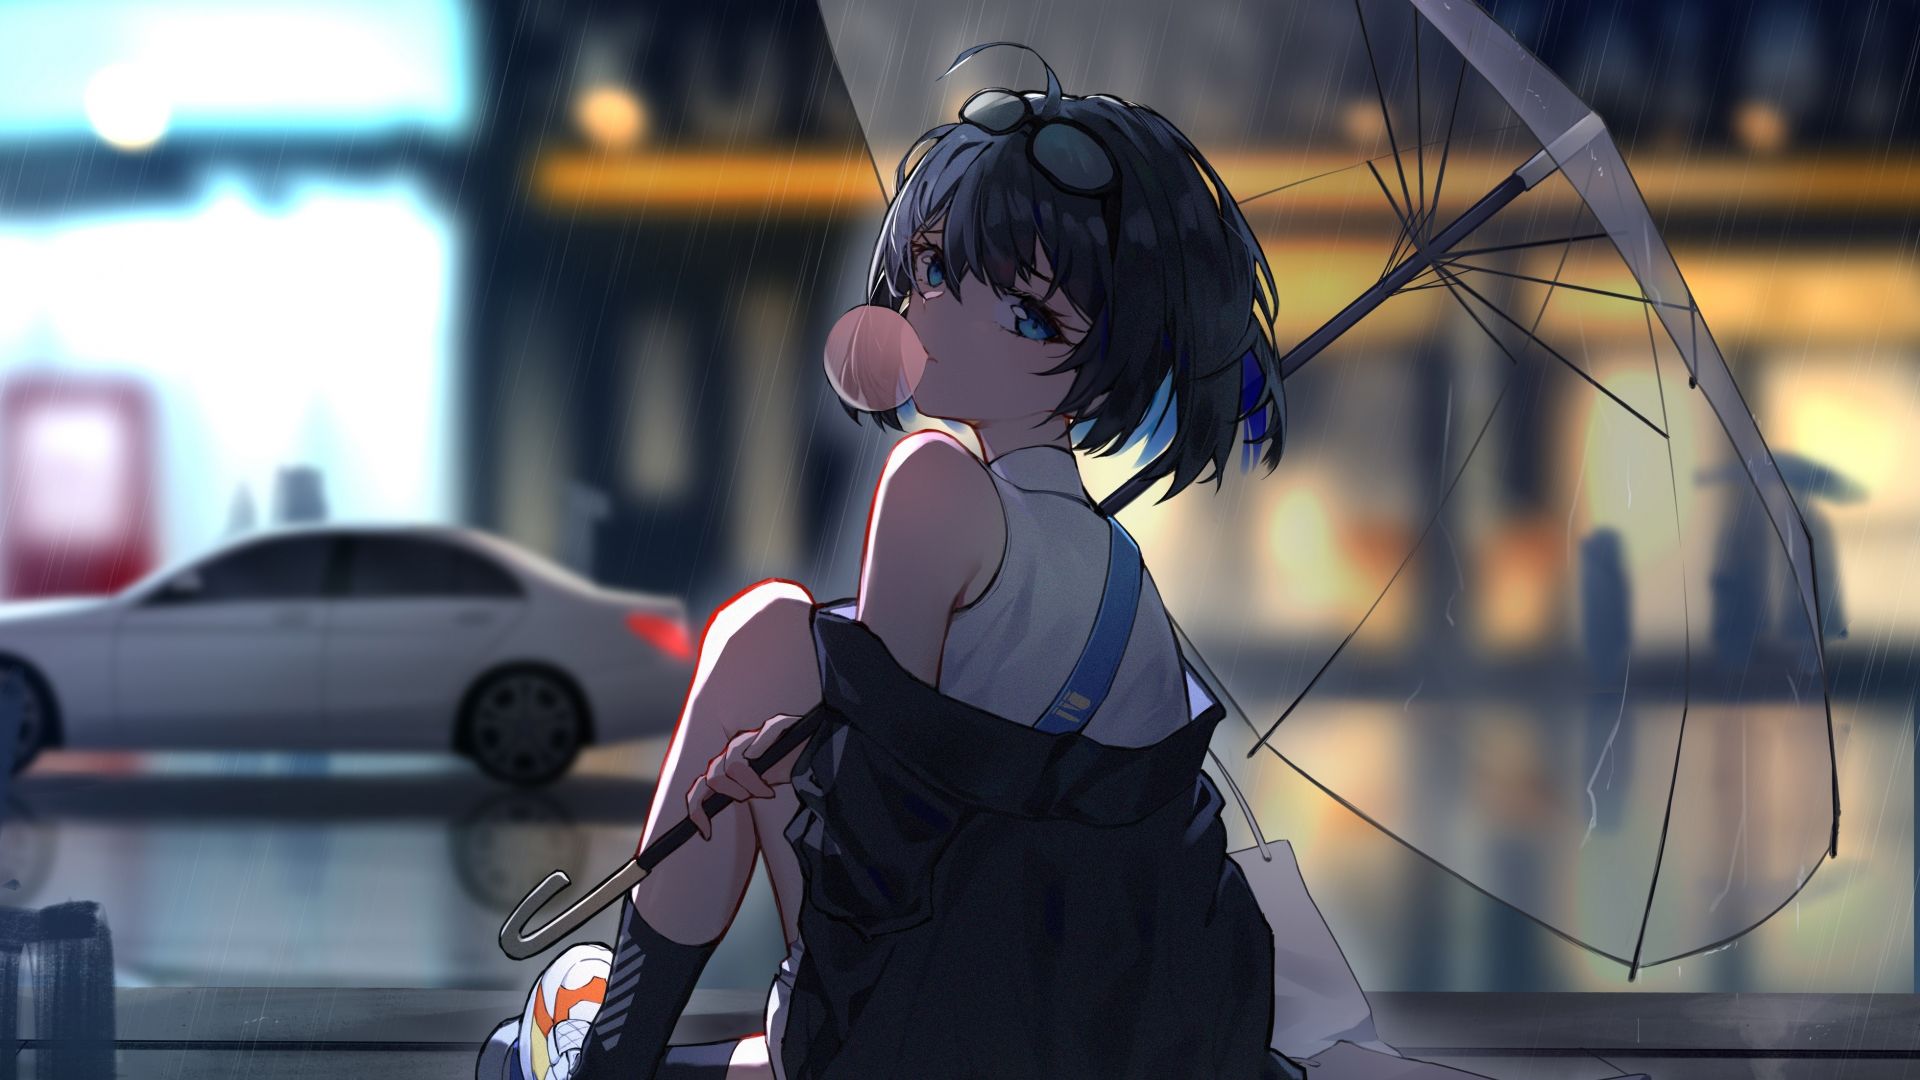 Desktop wallpaper enjoying rain, anime girl, HD image, picture, background, 5b8d62